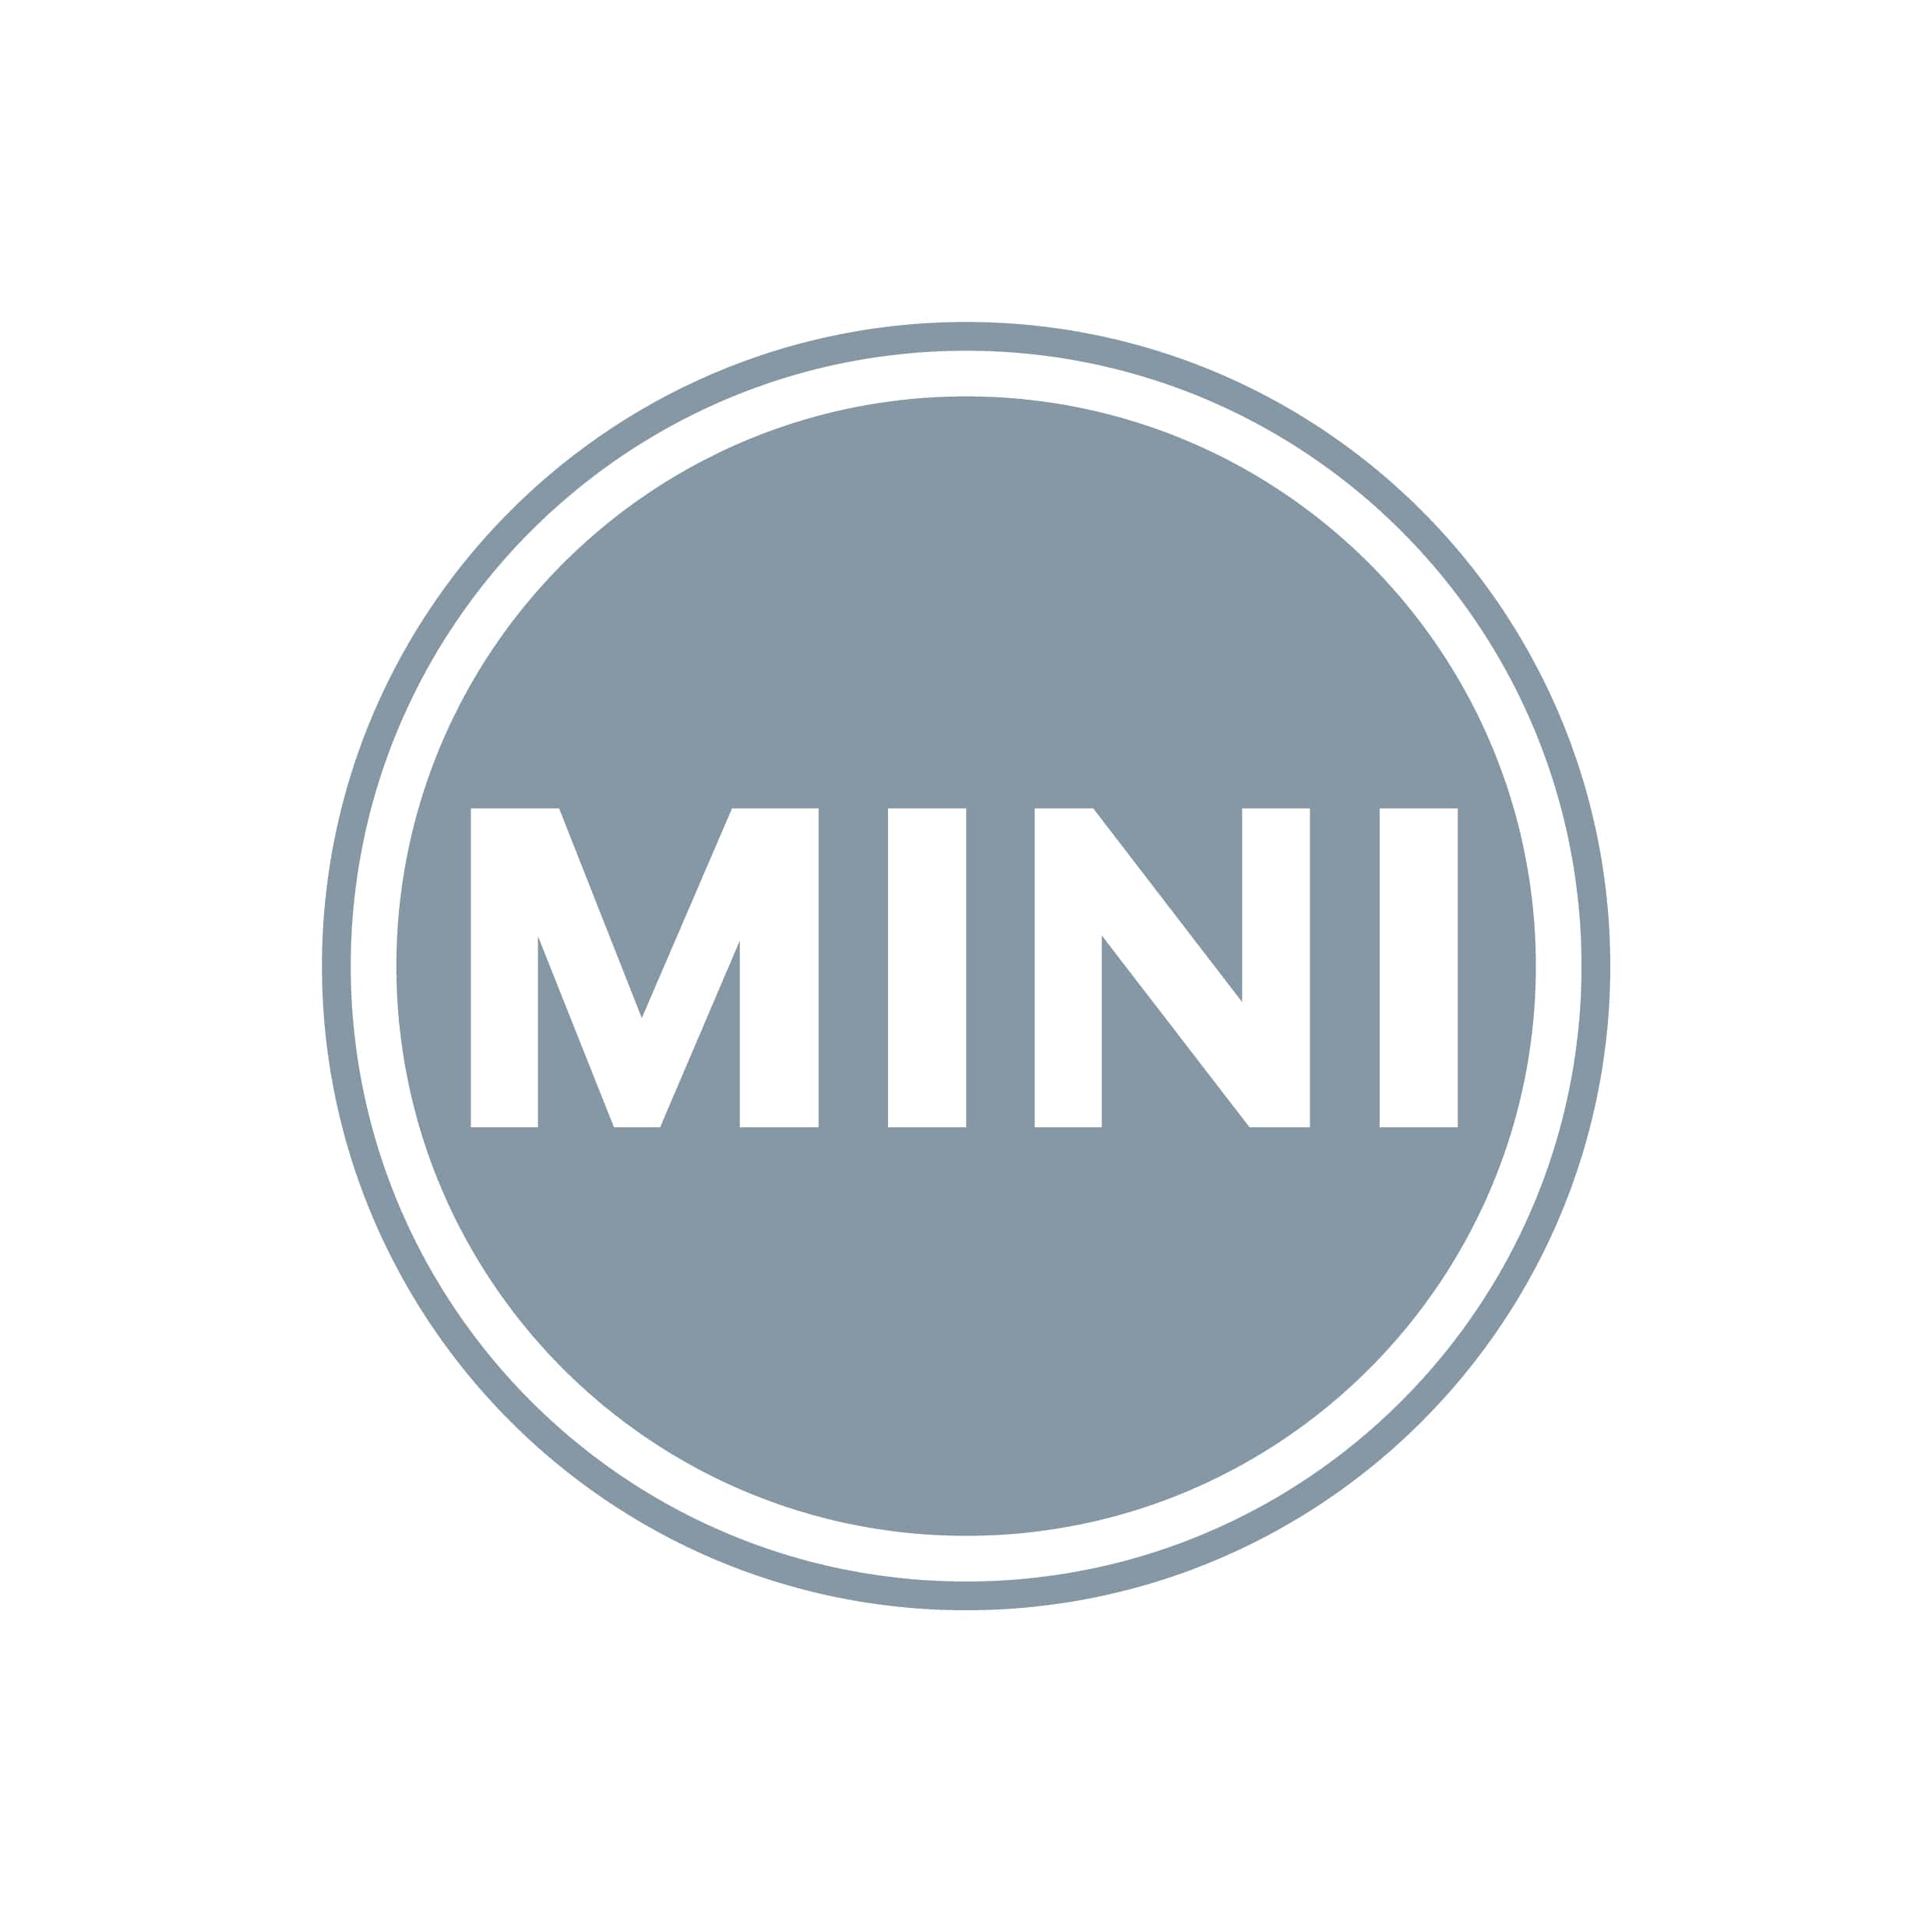 stickers-mini-ref3-bmw-autocollant-voiture-sticker-auto-autocollants-decals-sponsors-racing-tuning-sport-logo-min